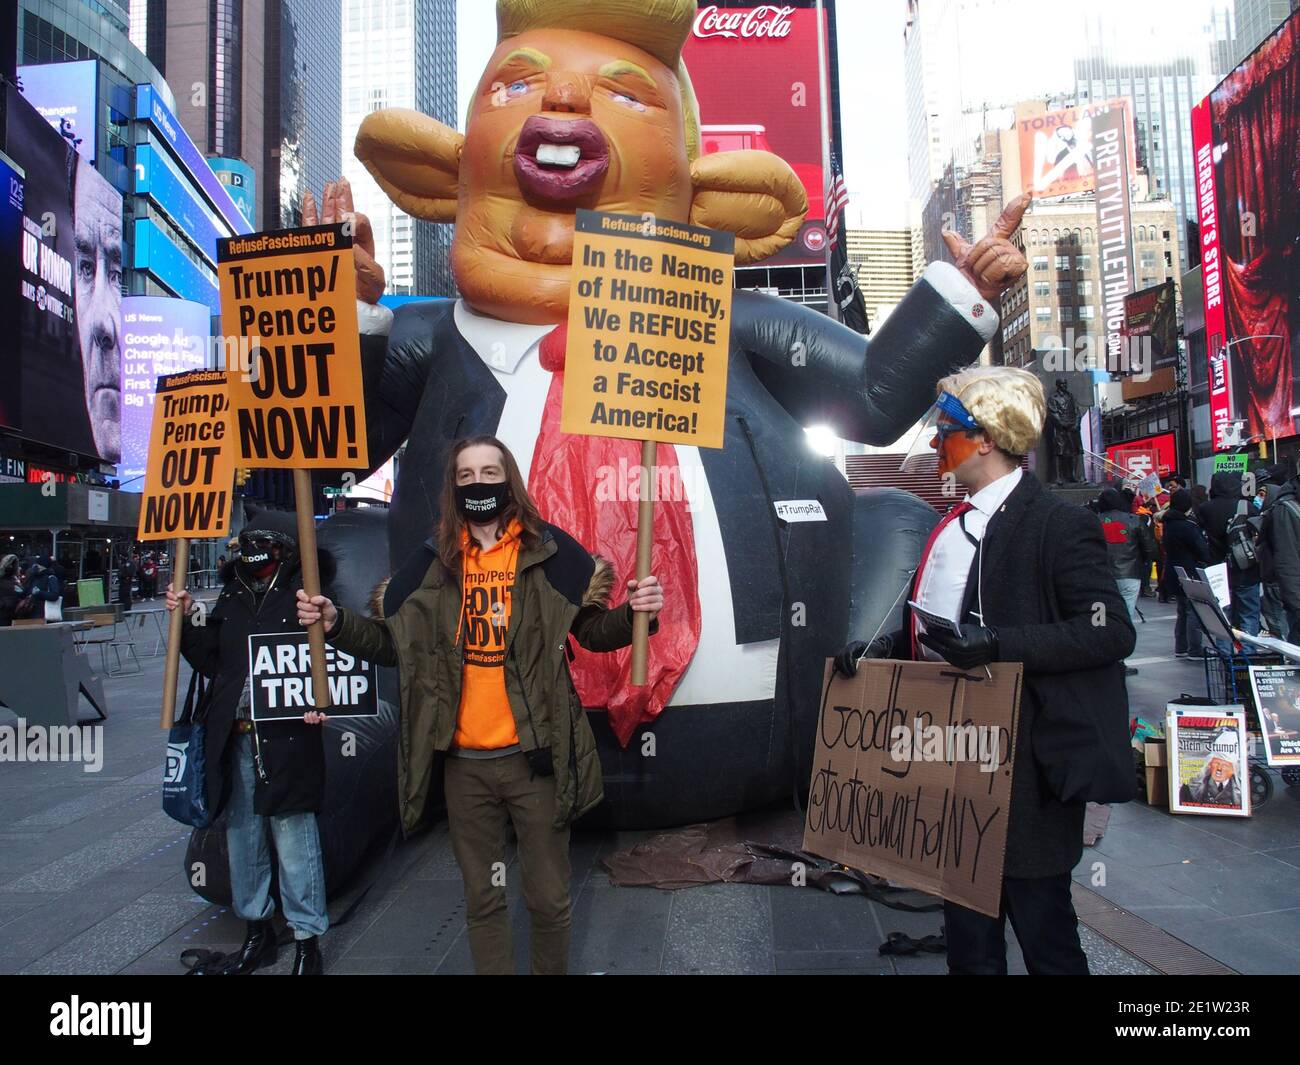 9 janvier 2021, New York, New York, Etats-Unis: New York City, Trump Pence sortir maintenant Rally tenu dans Times Square. (Image crédit : © Bruce Cotler/ZUMA Wire) Banque D'Images